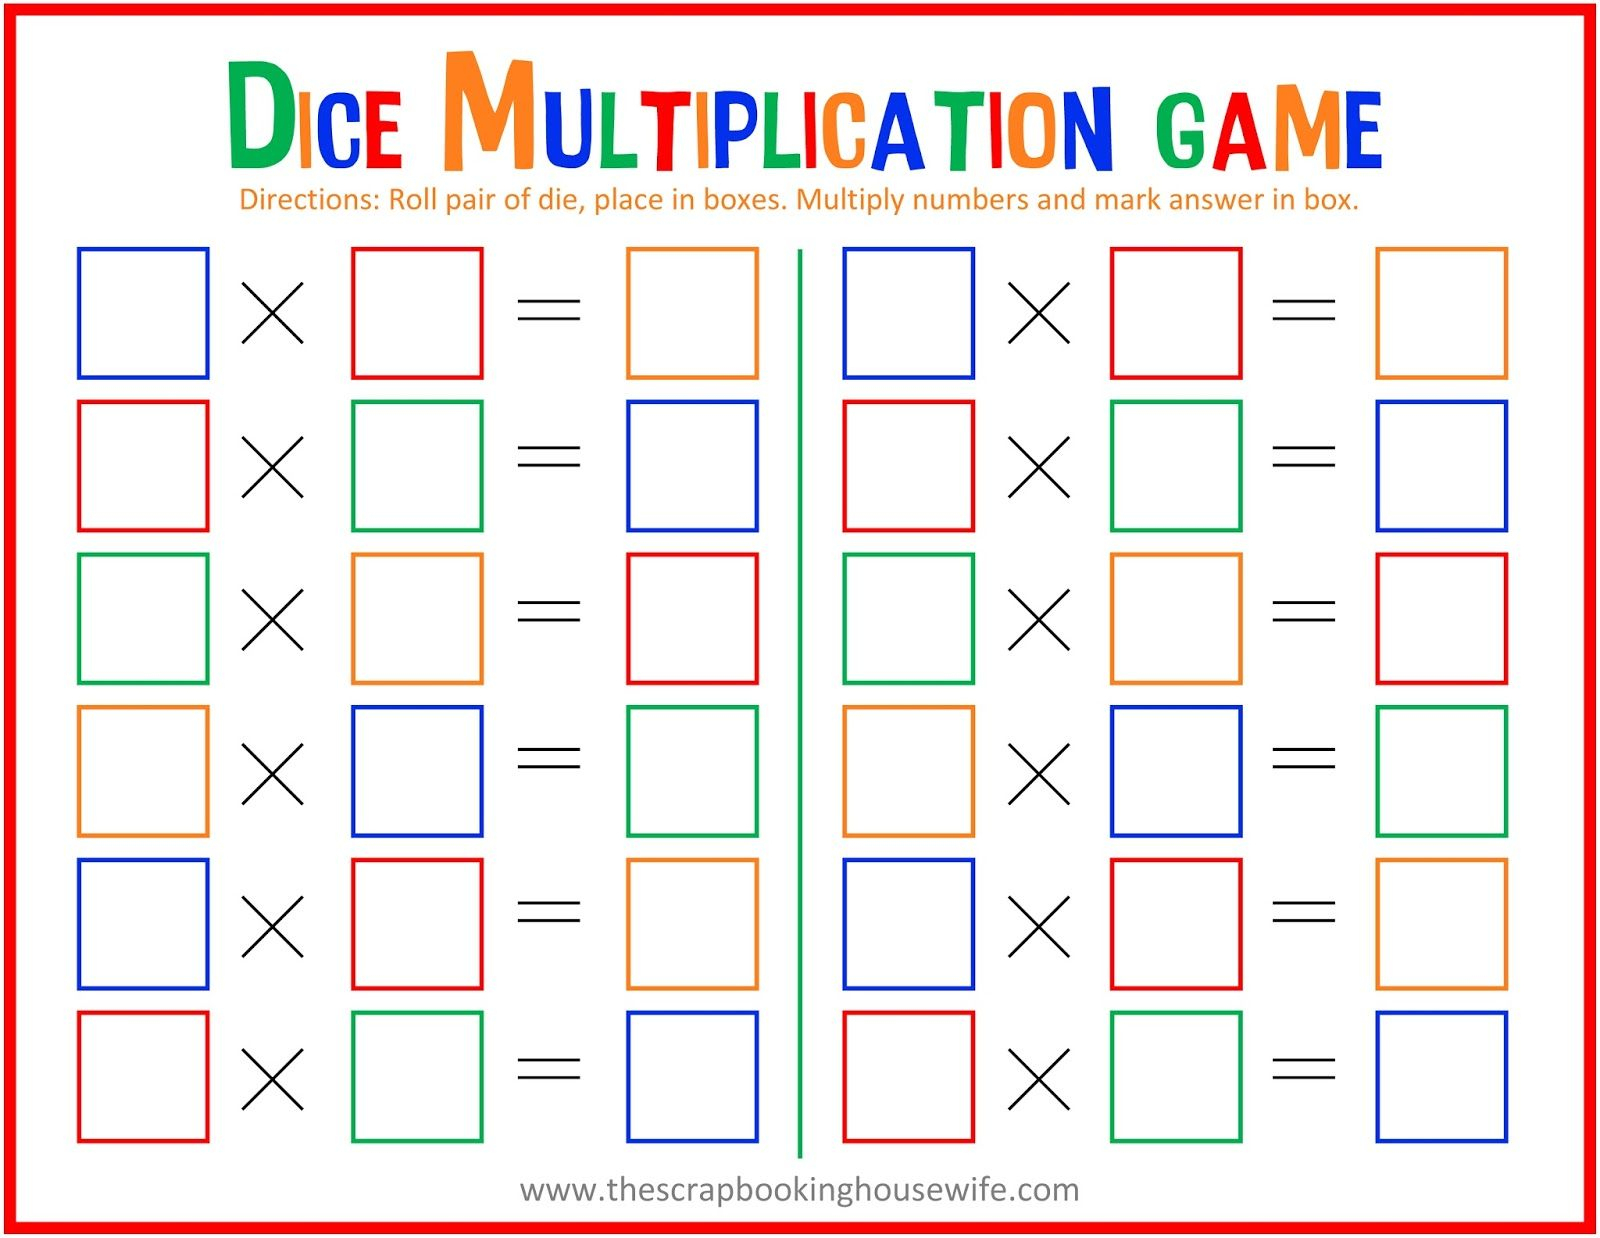 Dice Multiplication Math Game For Kids - Free Printable - Free Printable Maths Games